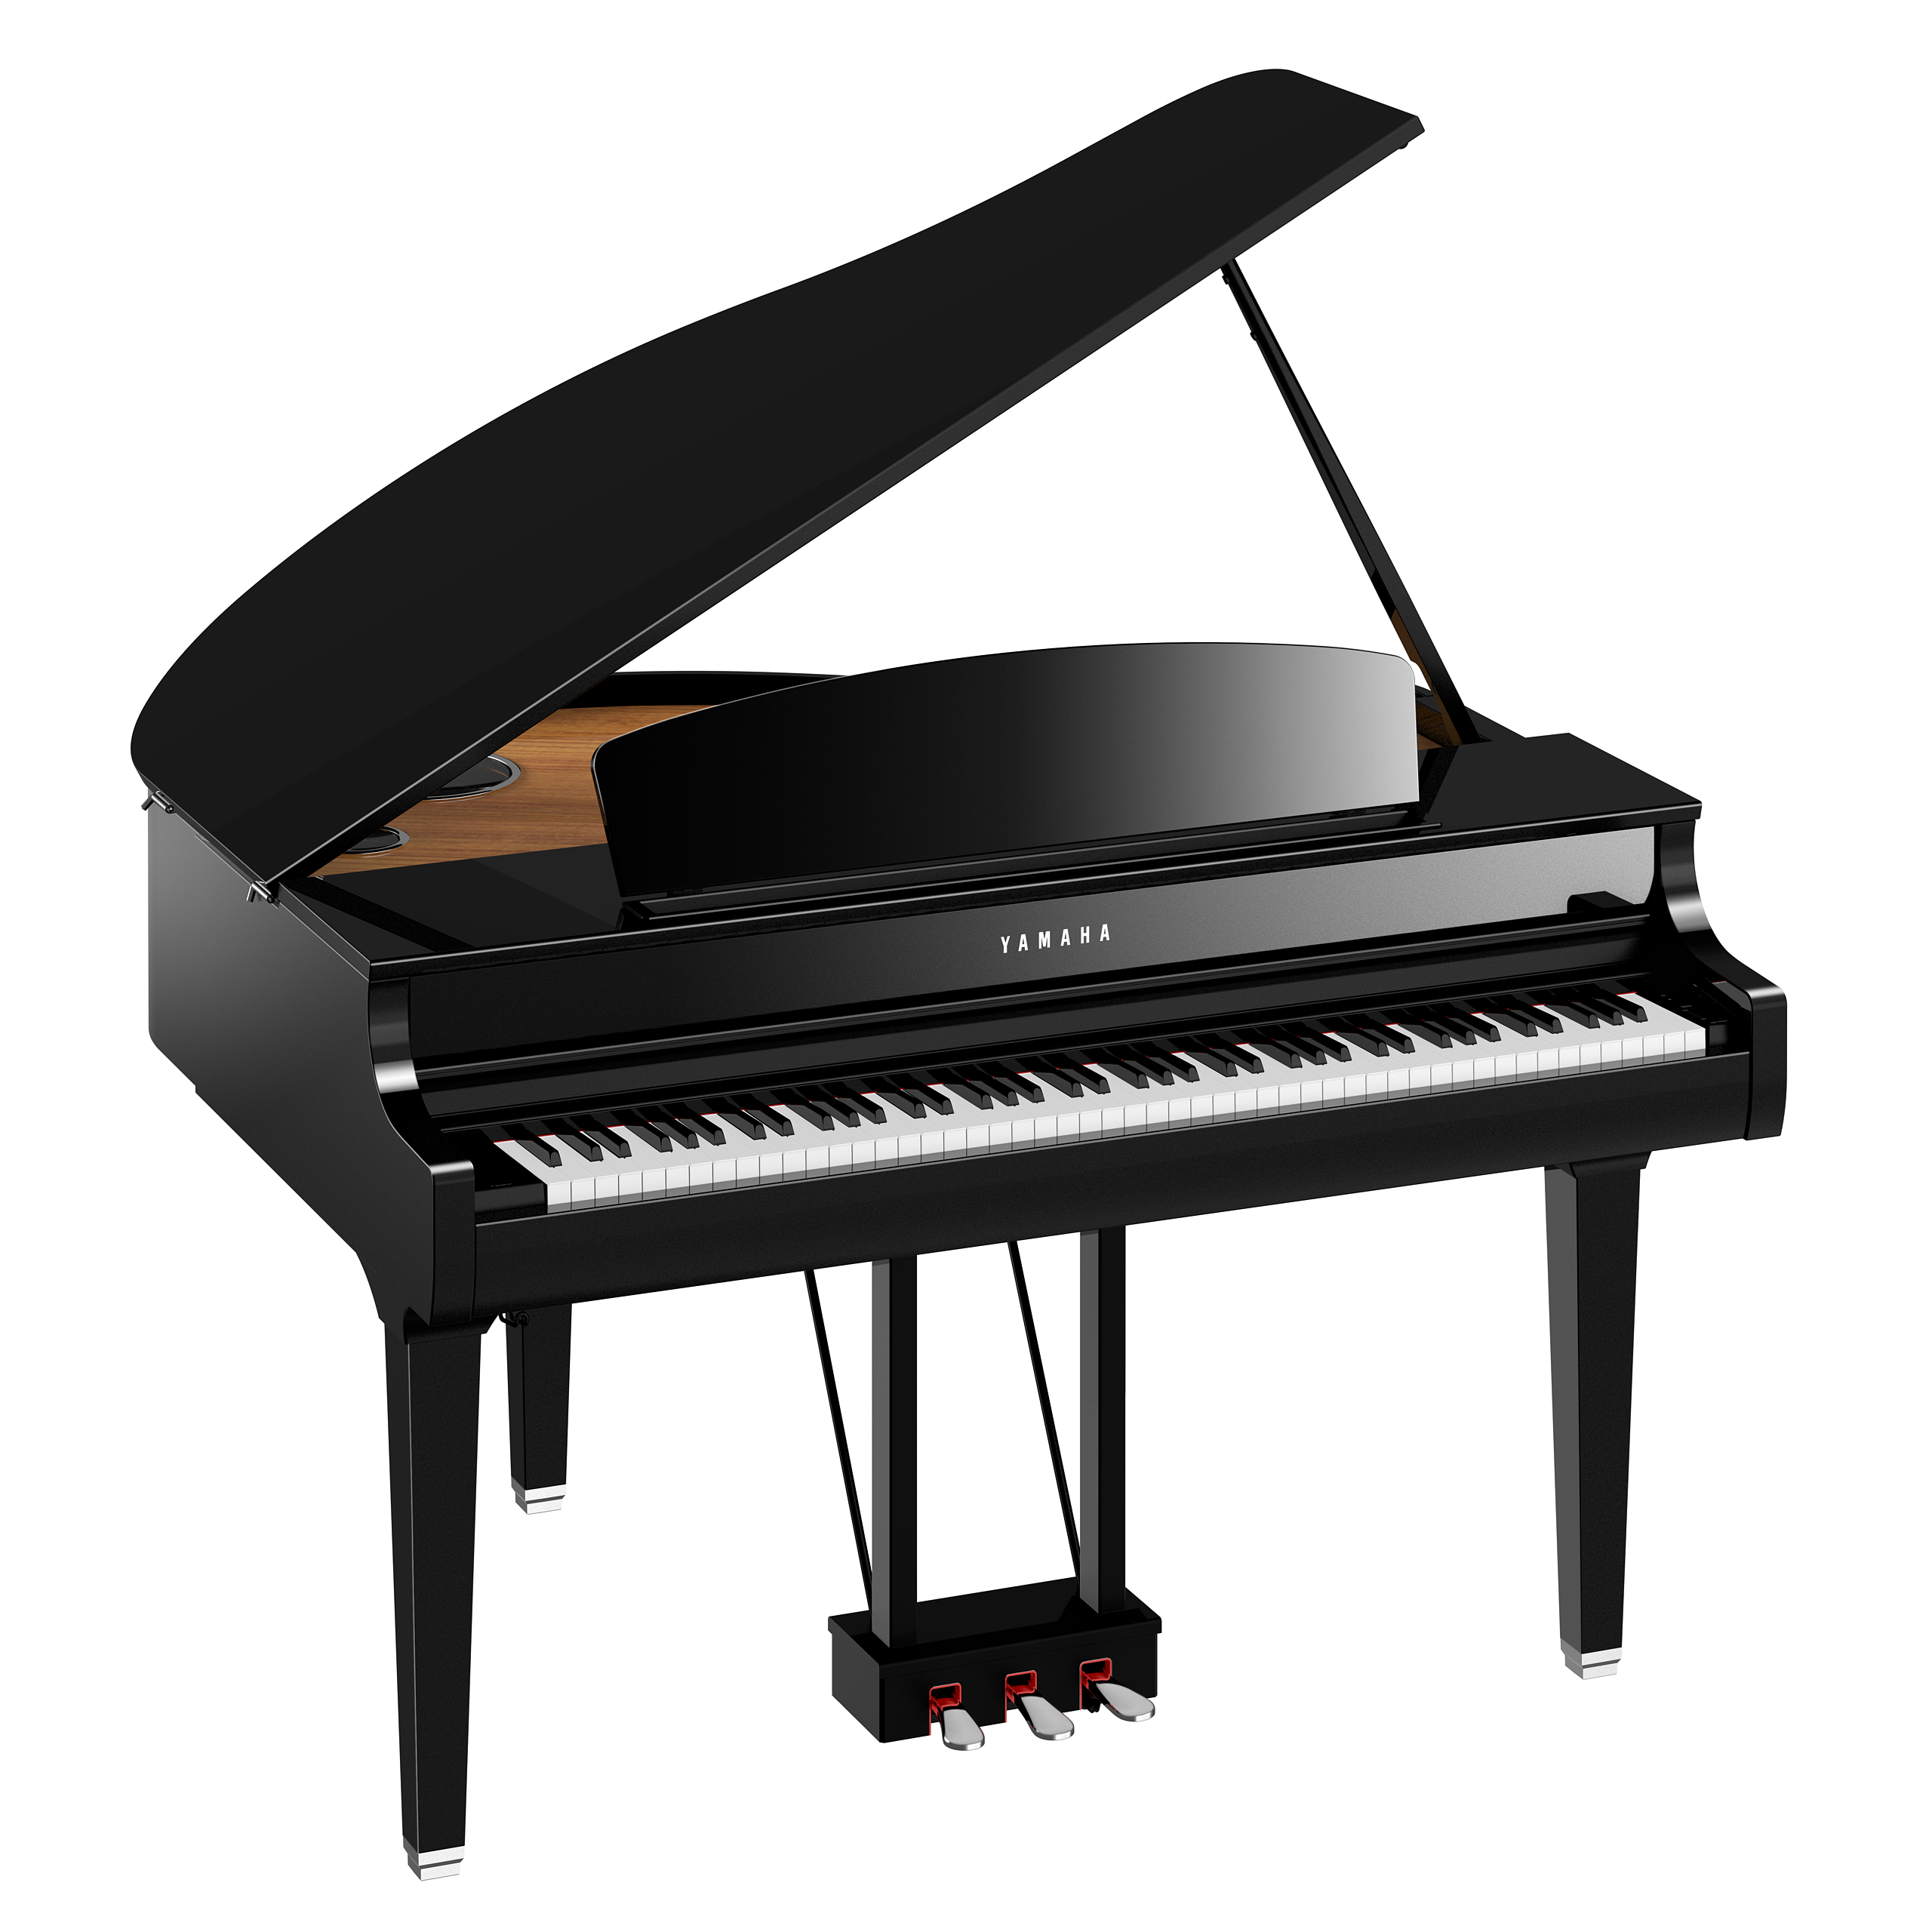 Yamaha Clp 795 Gp - Digital piano with stand - Variation 1